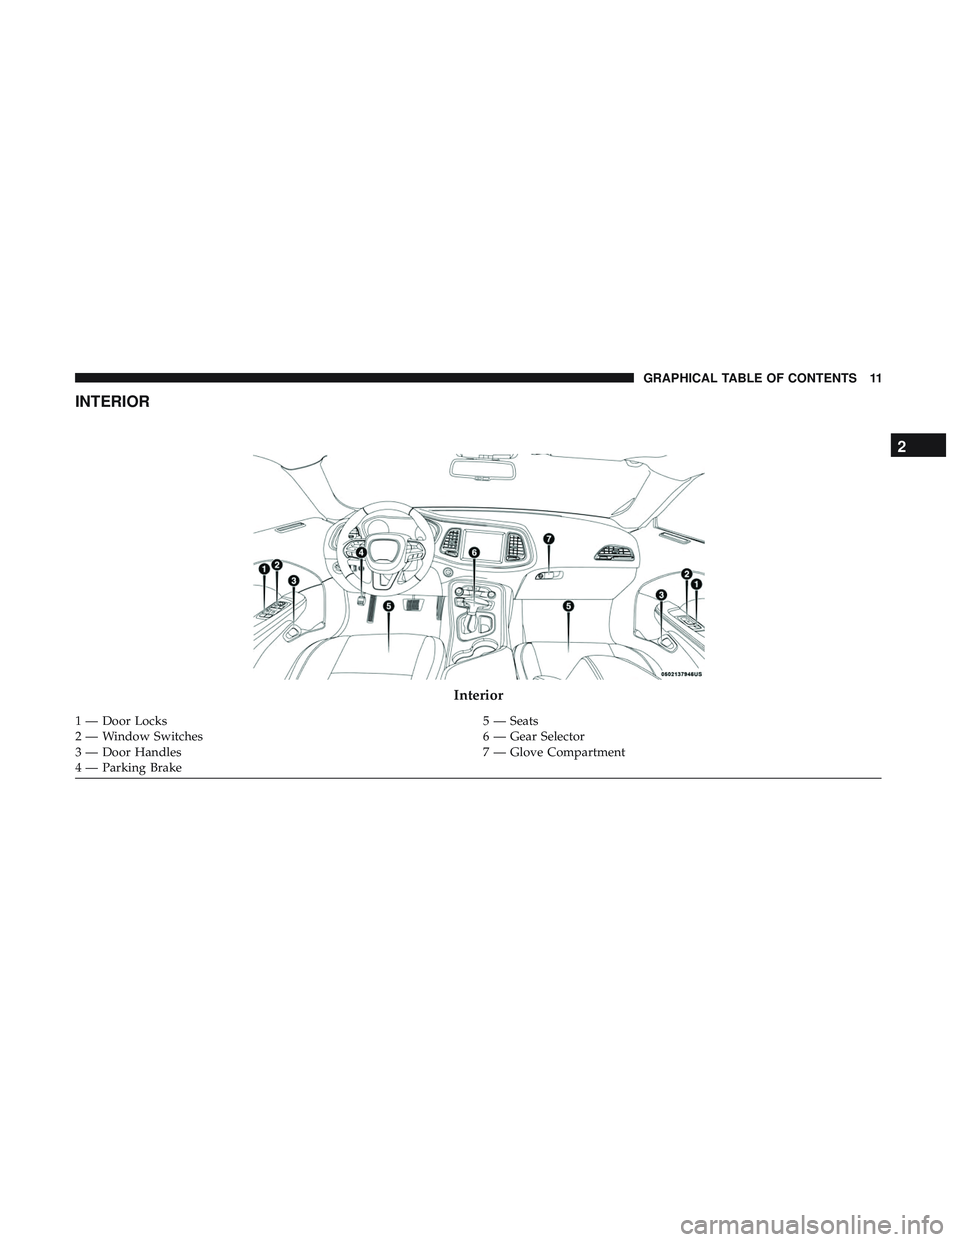 DODGE CHALLENGER 2019 User Guide INTERIOR
Interior
1 — Door Locks5 — Seats
2 — Window Switches 6 — Gear Selector
3 — Door Handles 7 — Glove Compartment
4 — Parking Brake
2
GRAPHICAL TABLE OF CONTENTS 11 